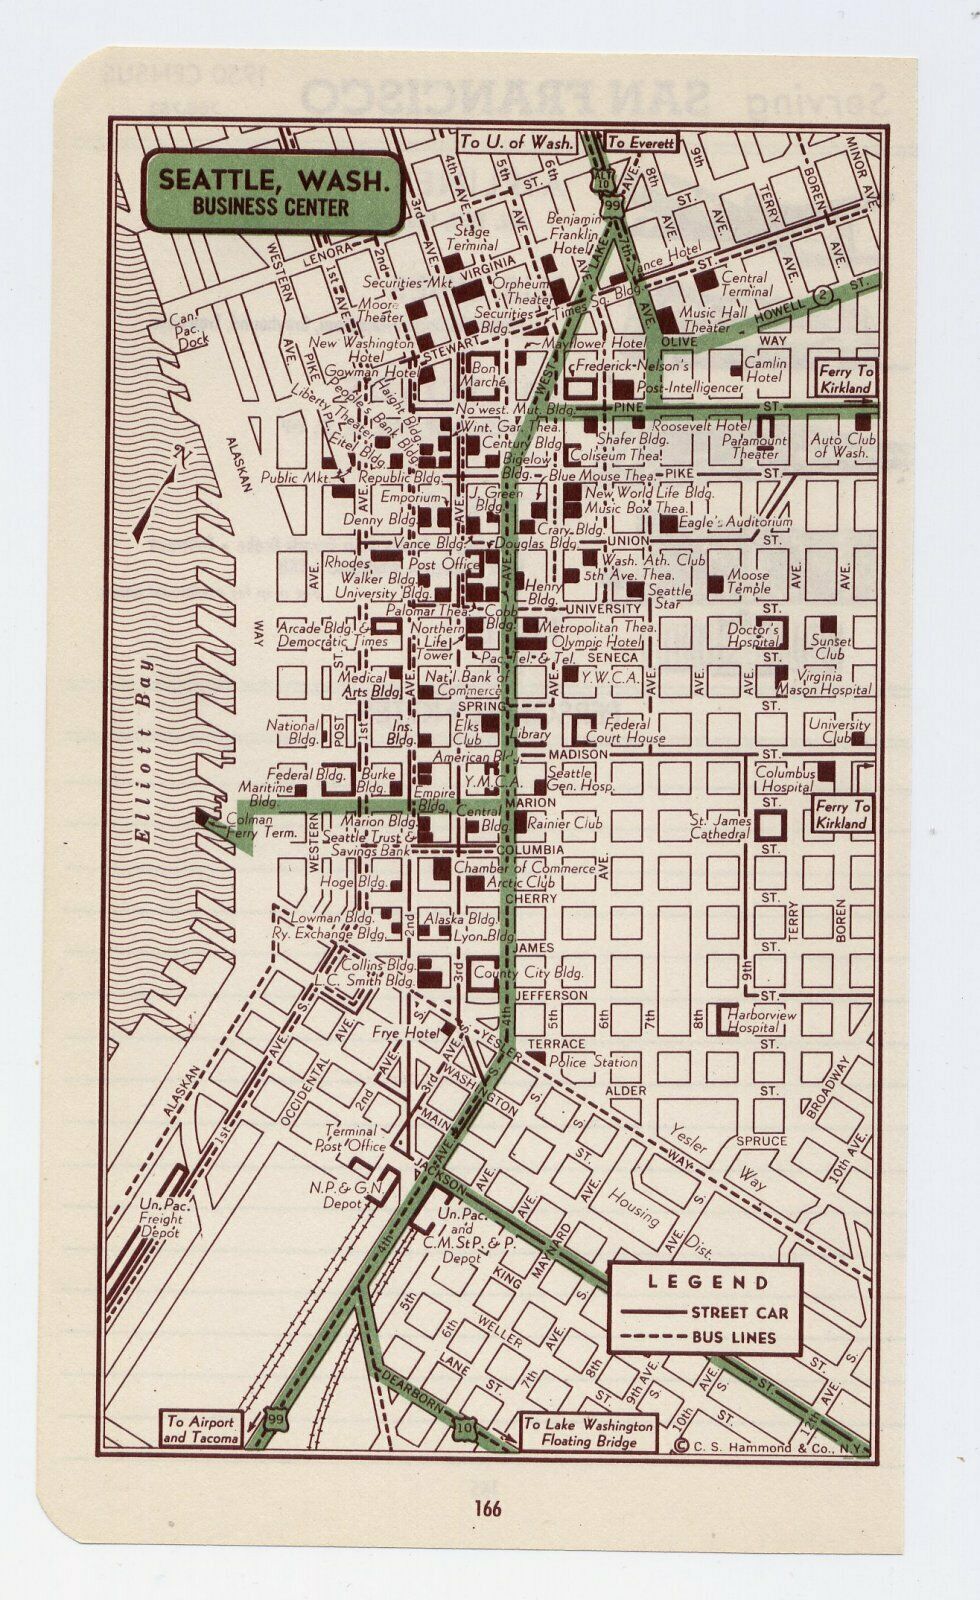 1951 Original Vintage Map Of Seattle Washington Downtown Business Center